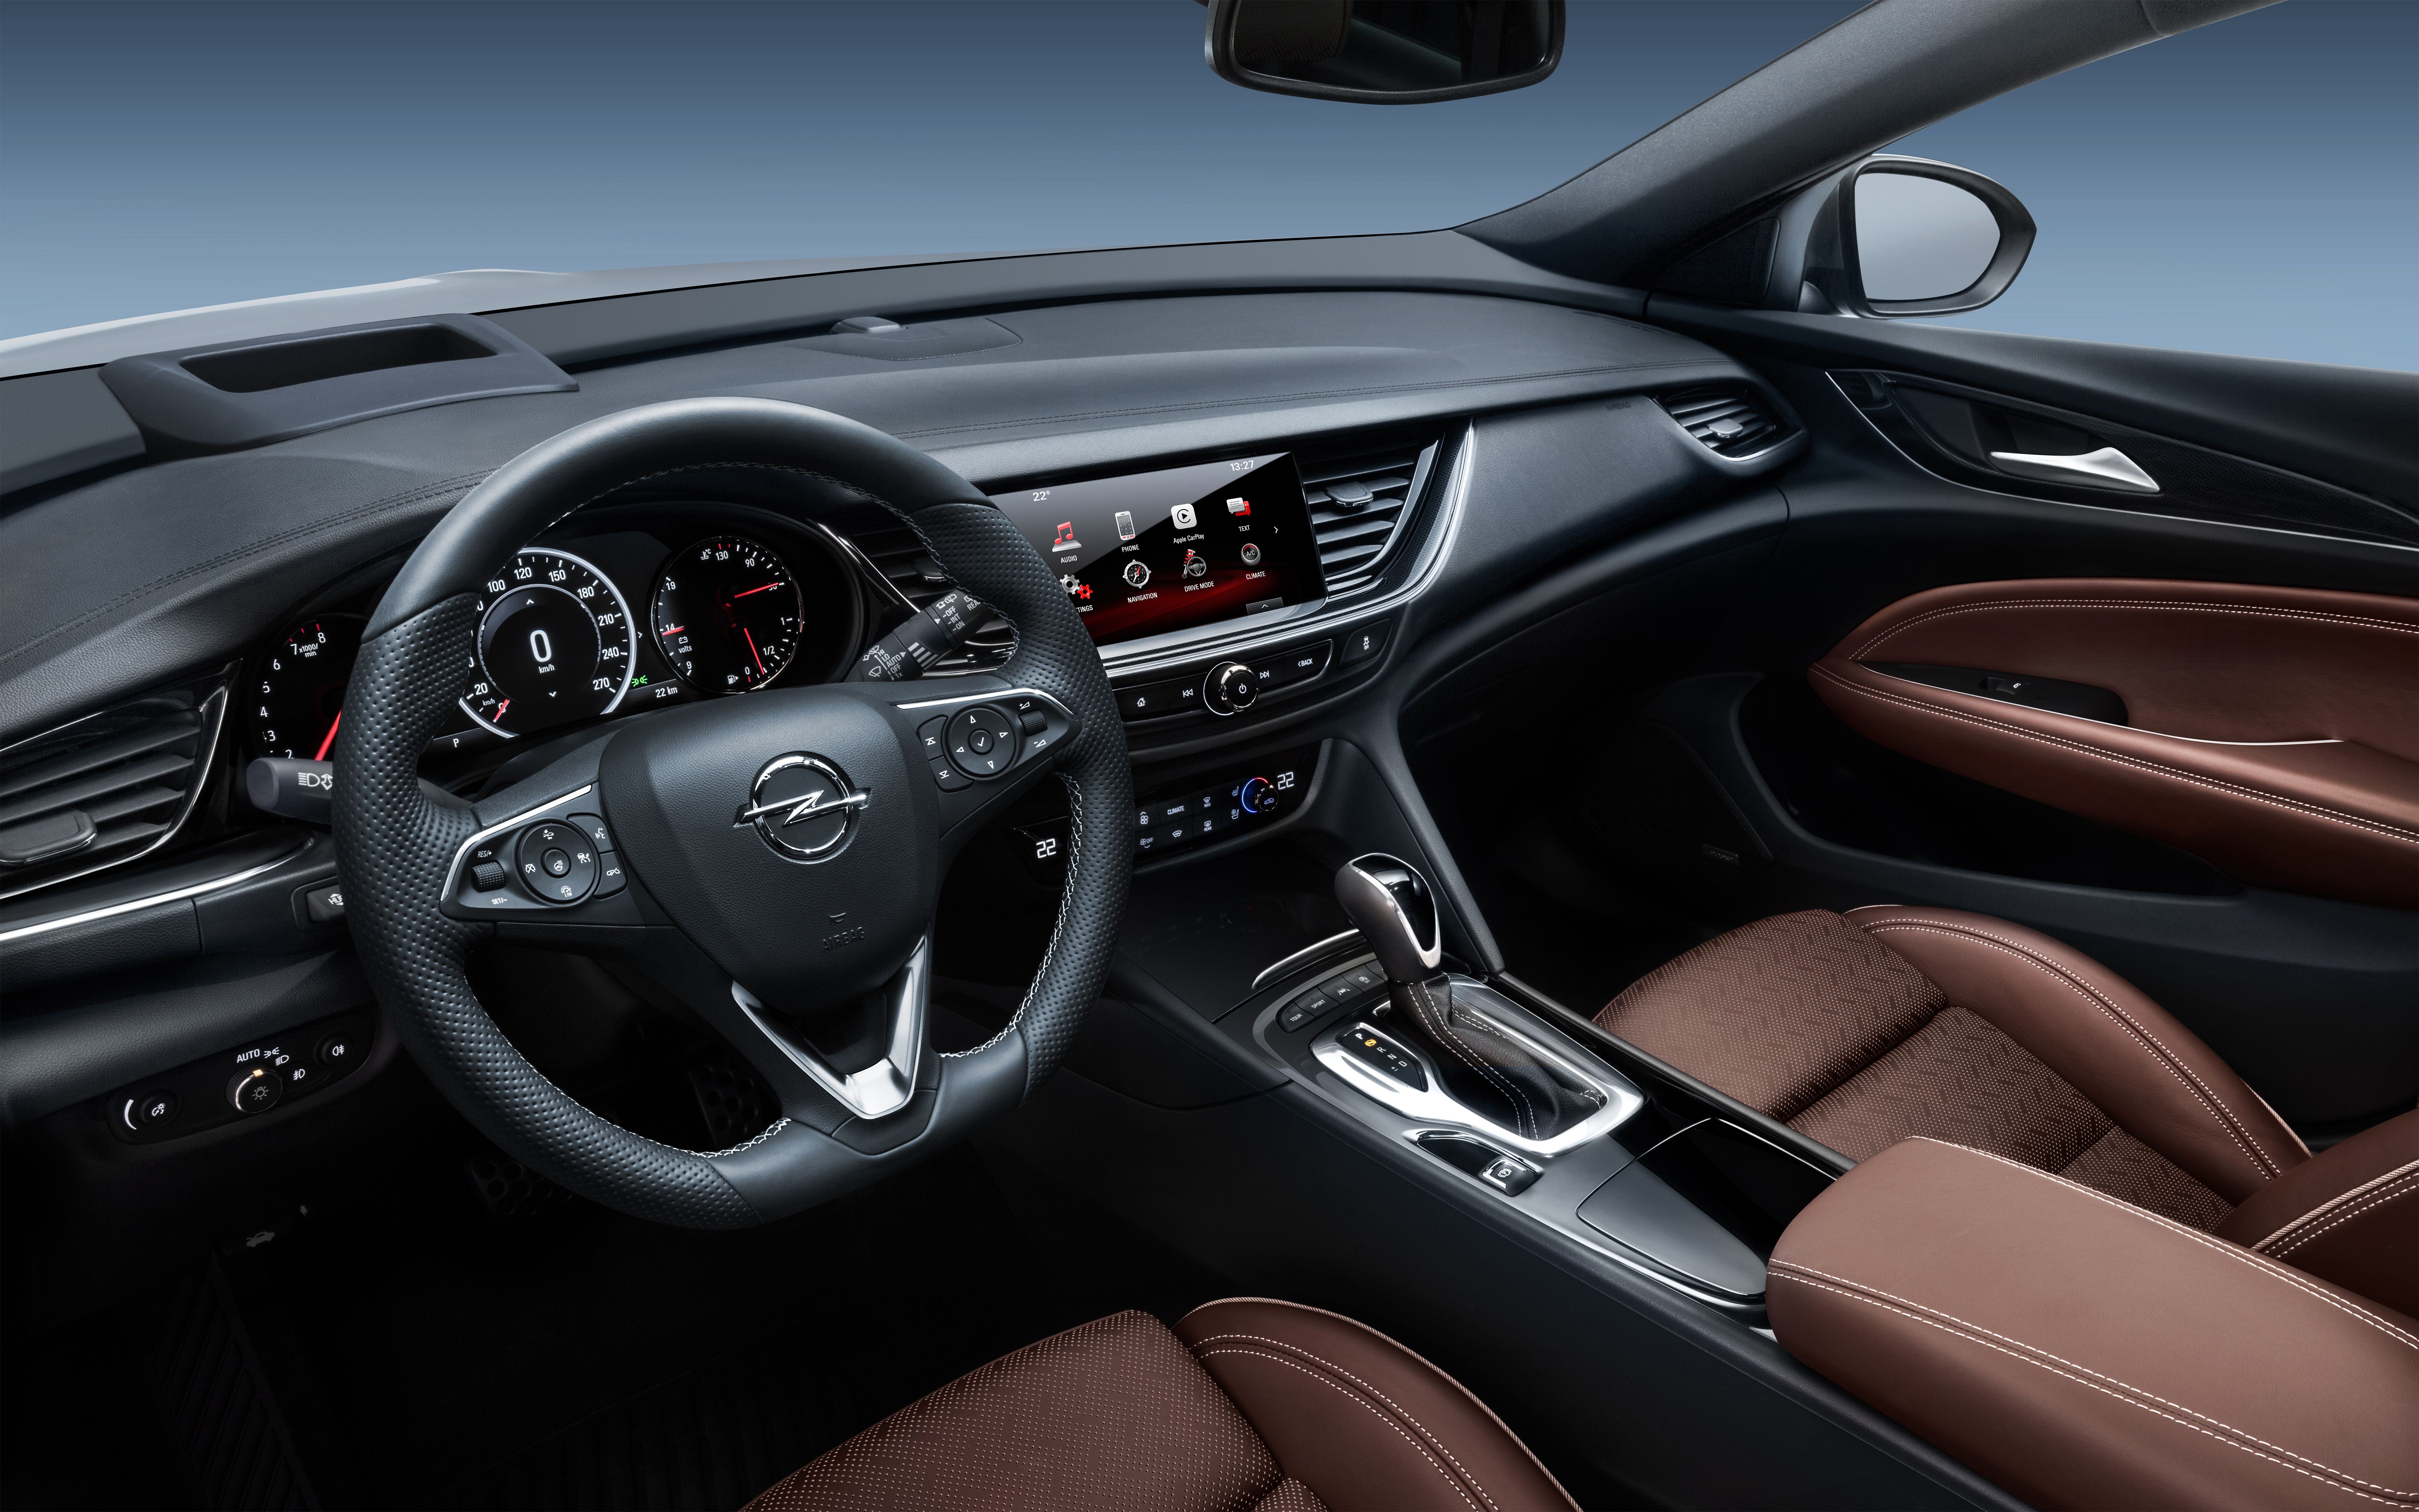 Opel Insignia Grand Sport interior specifications